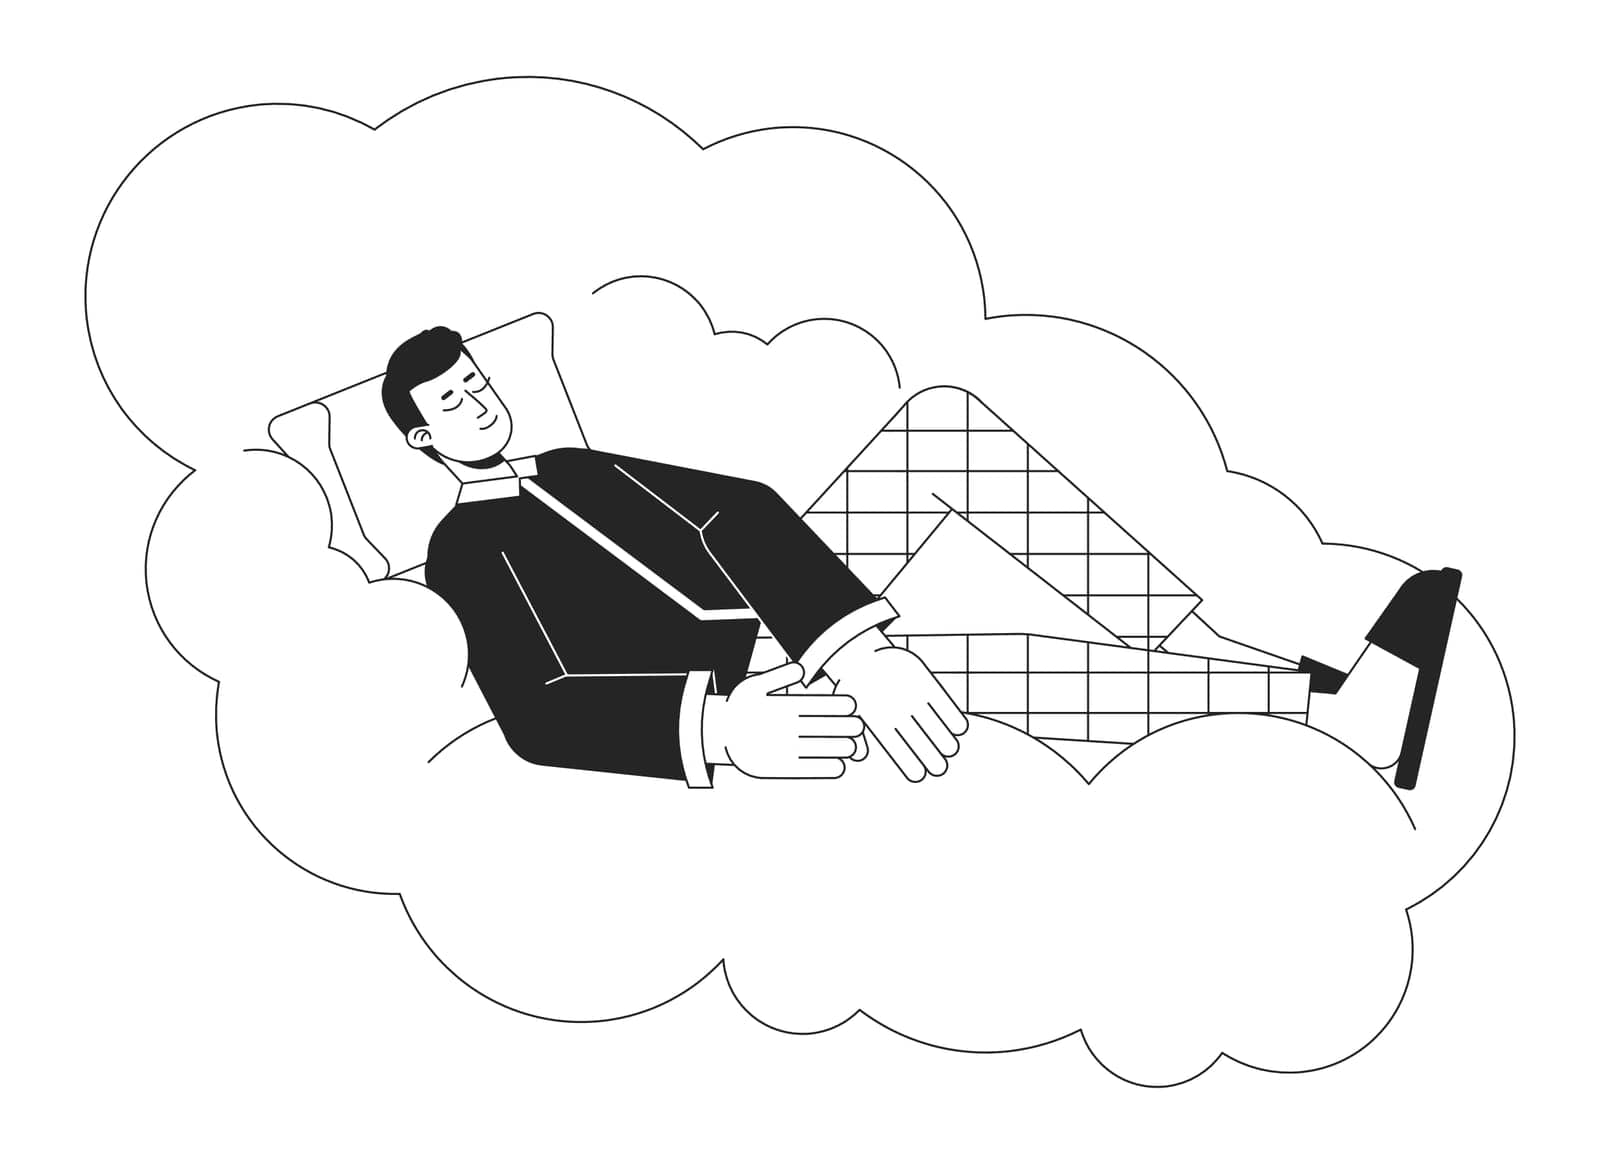 Good night sleep bw concept vector spot illustration. Man sleeping peaceful on cloud 2D cartoon flat line monochromatic character for web app UI design. Mental health editable outline hero image